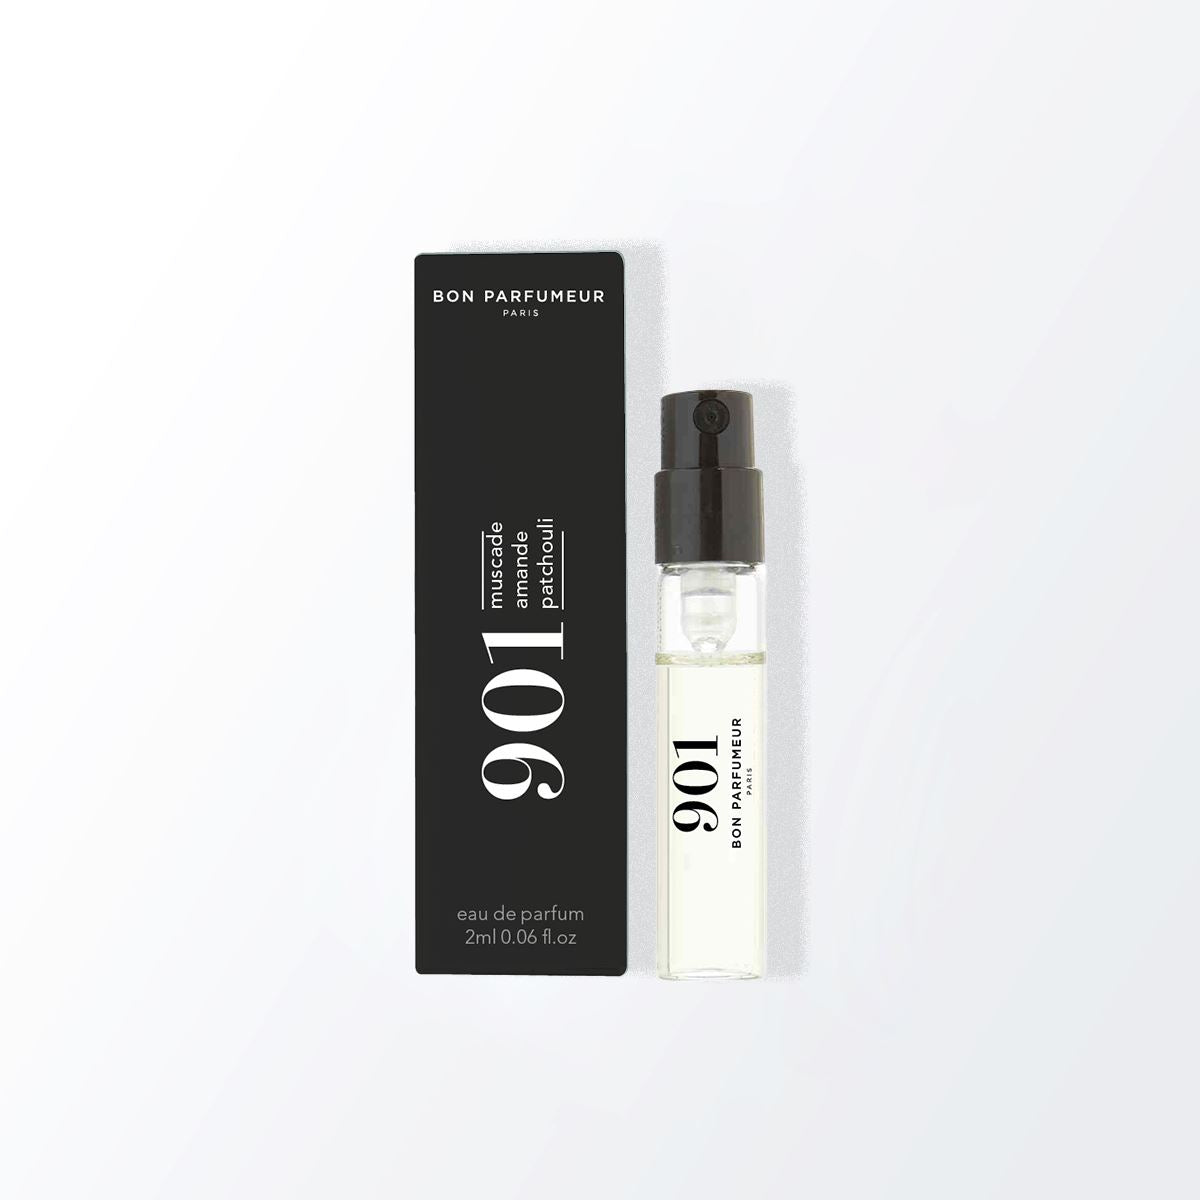 Spray parfumé payant Bon Parfumeur 901: Muscade, amande, patchouli 